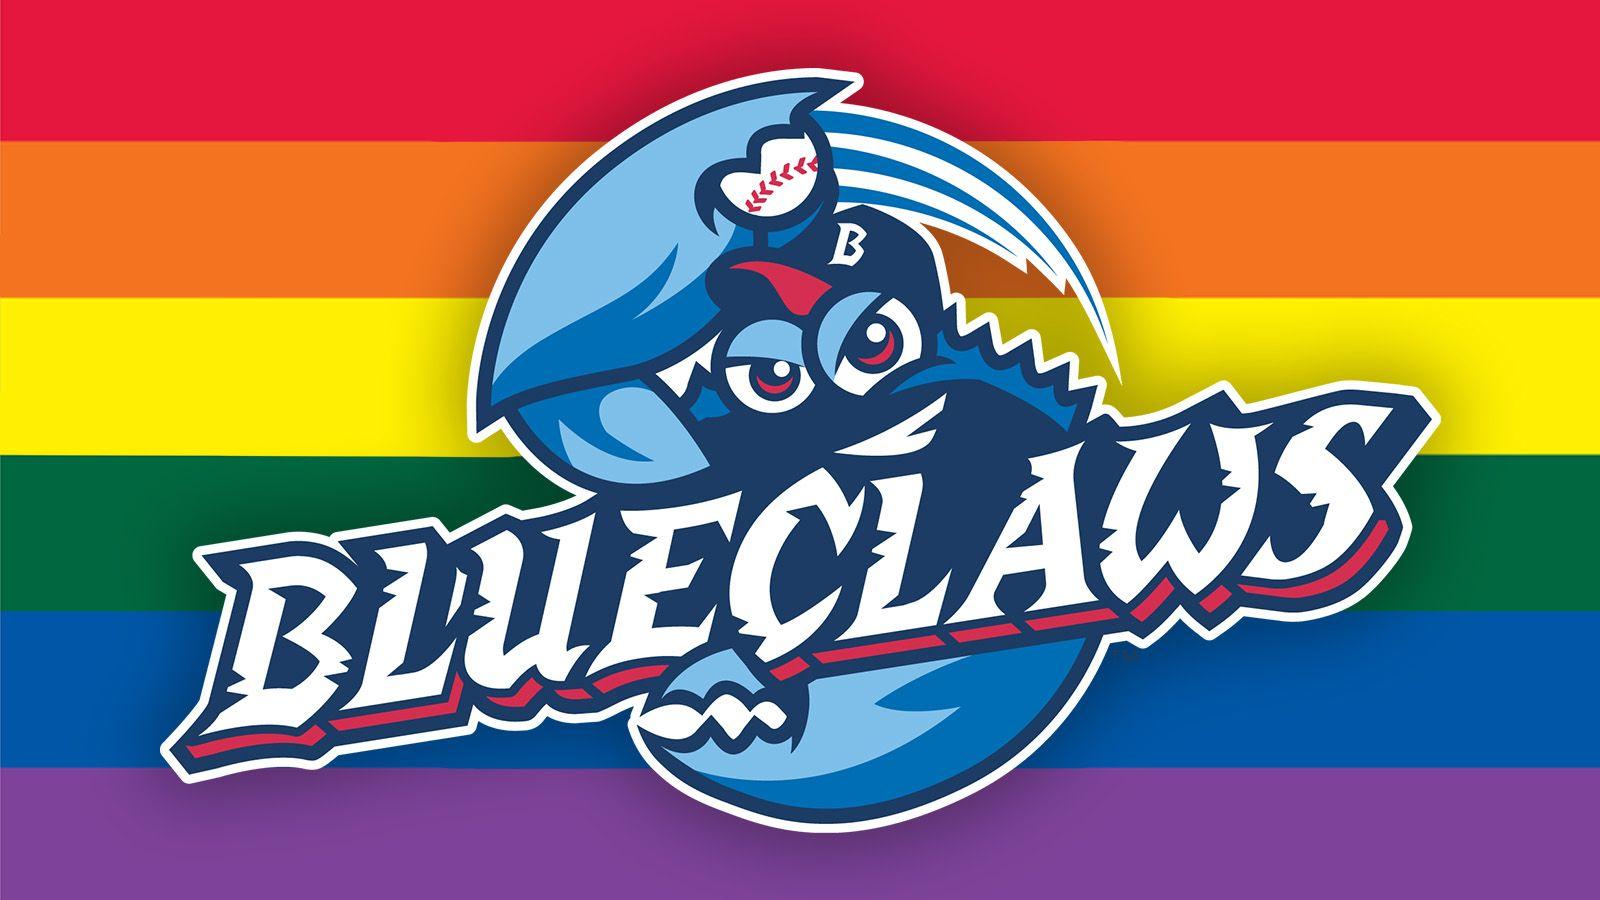 BlueClaws Logo LogoDix